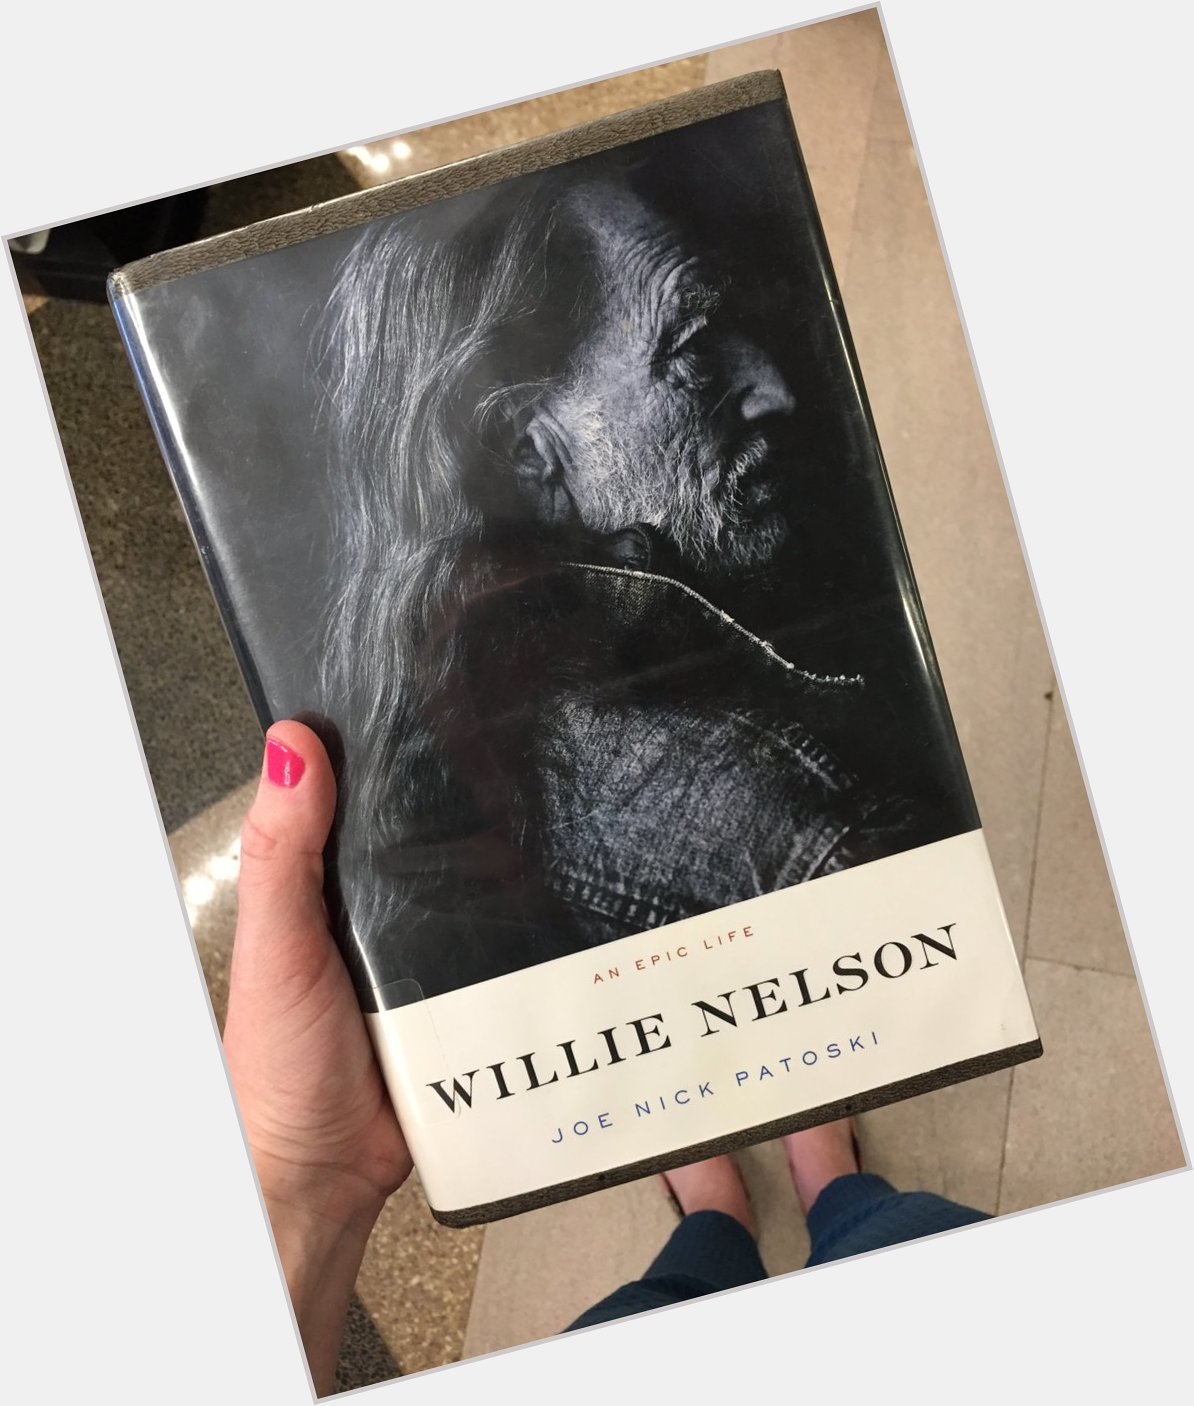 Happy birthday, Willie Nelson! 